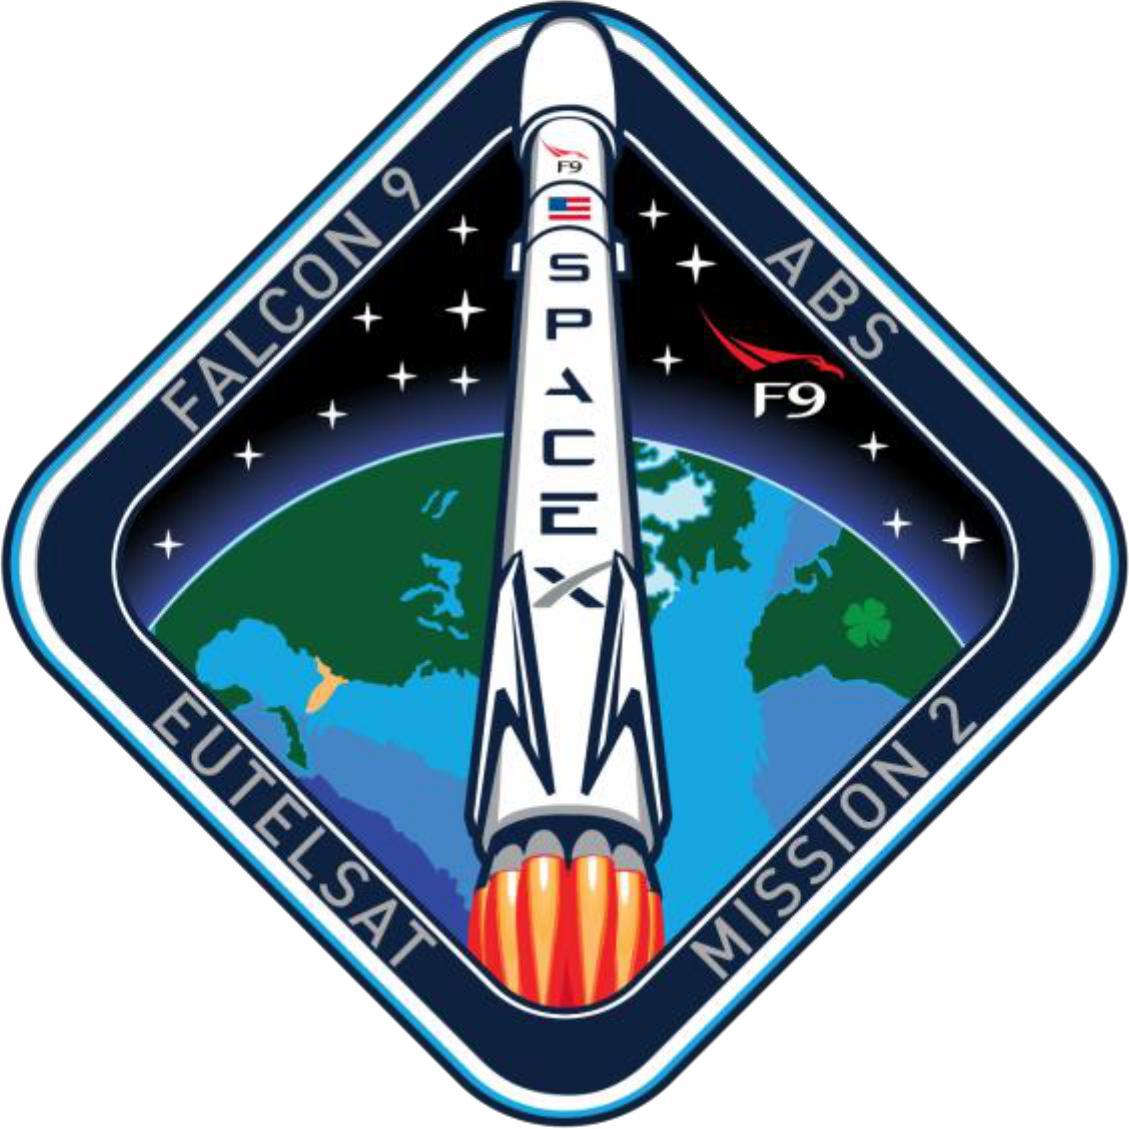 SpaceX Mission Logo - Eutelsat ABS Mission Patch